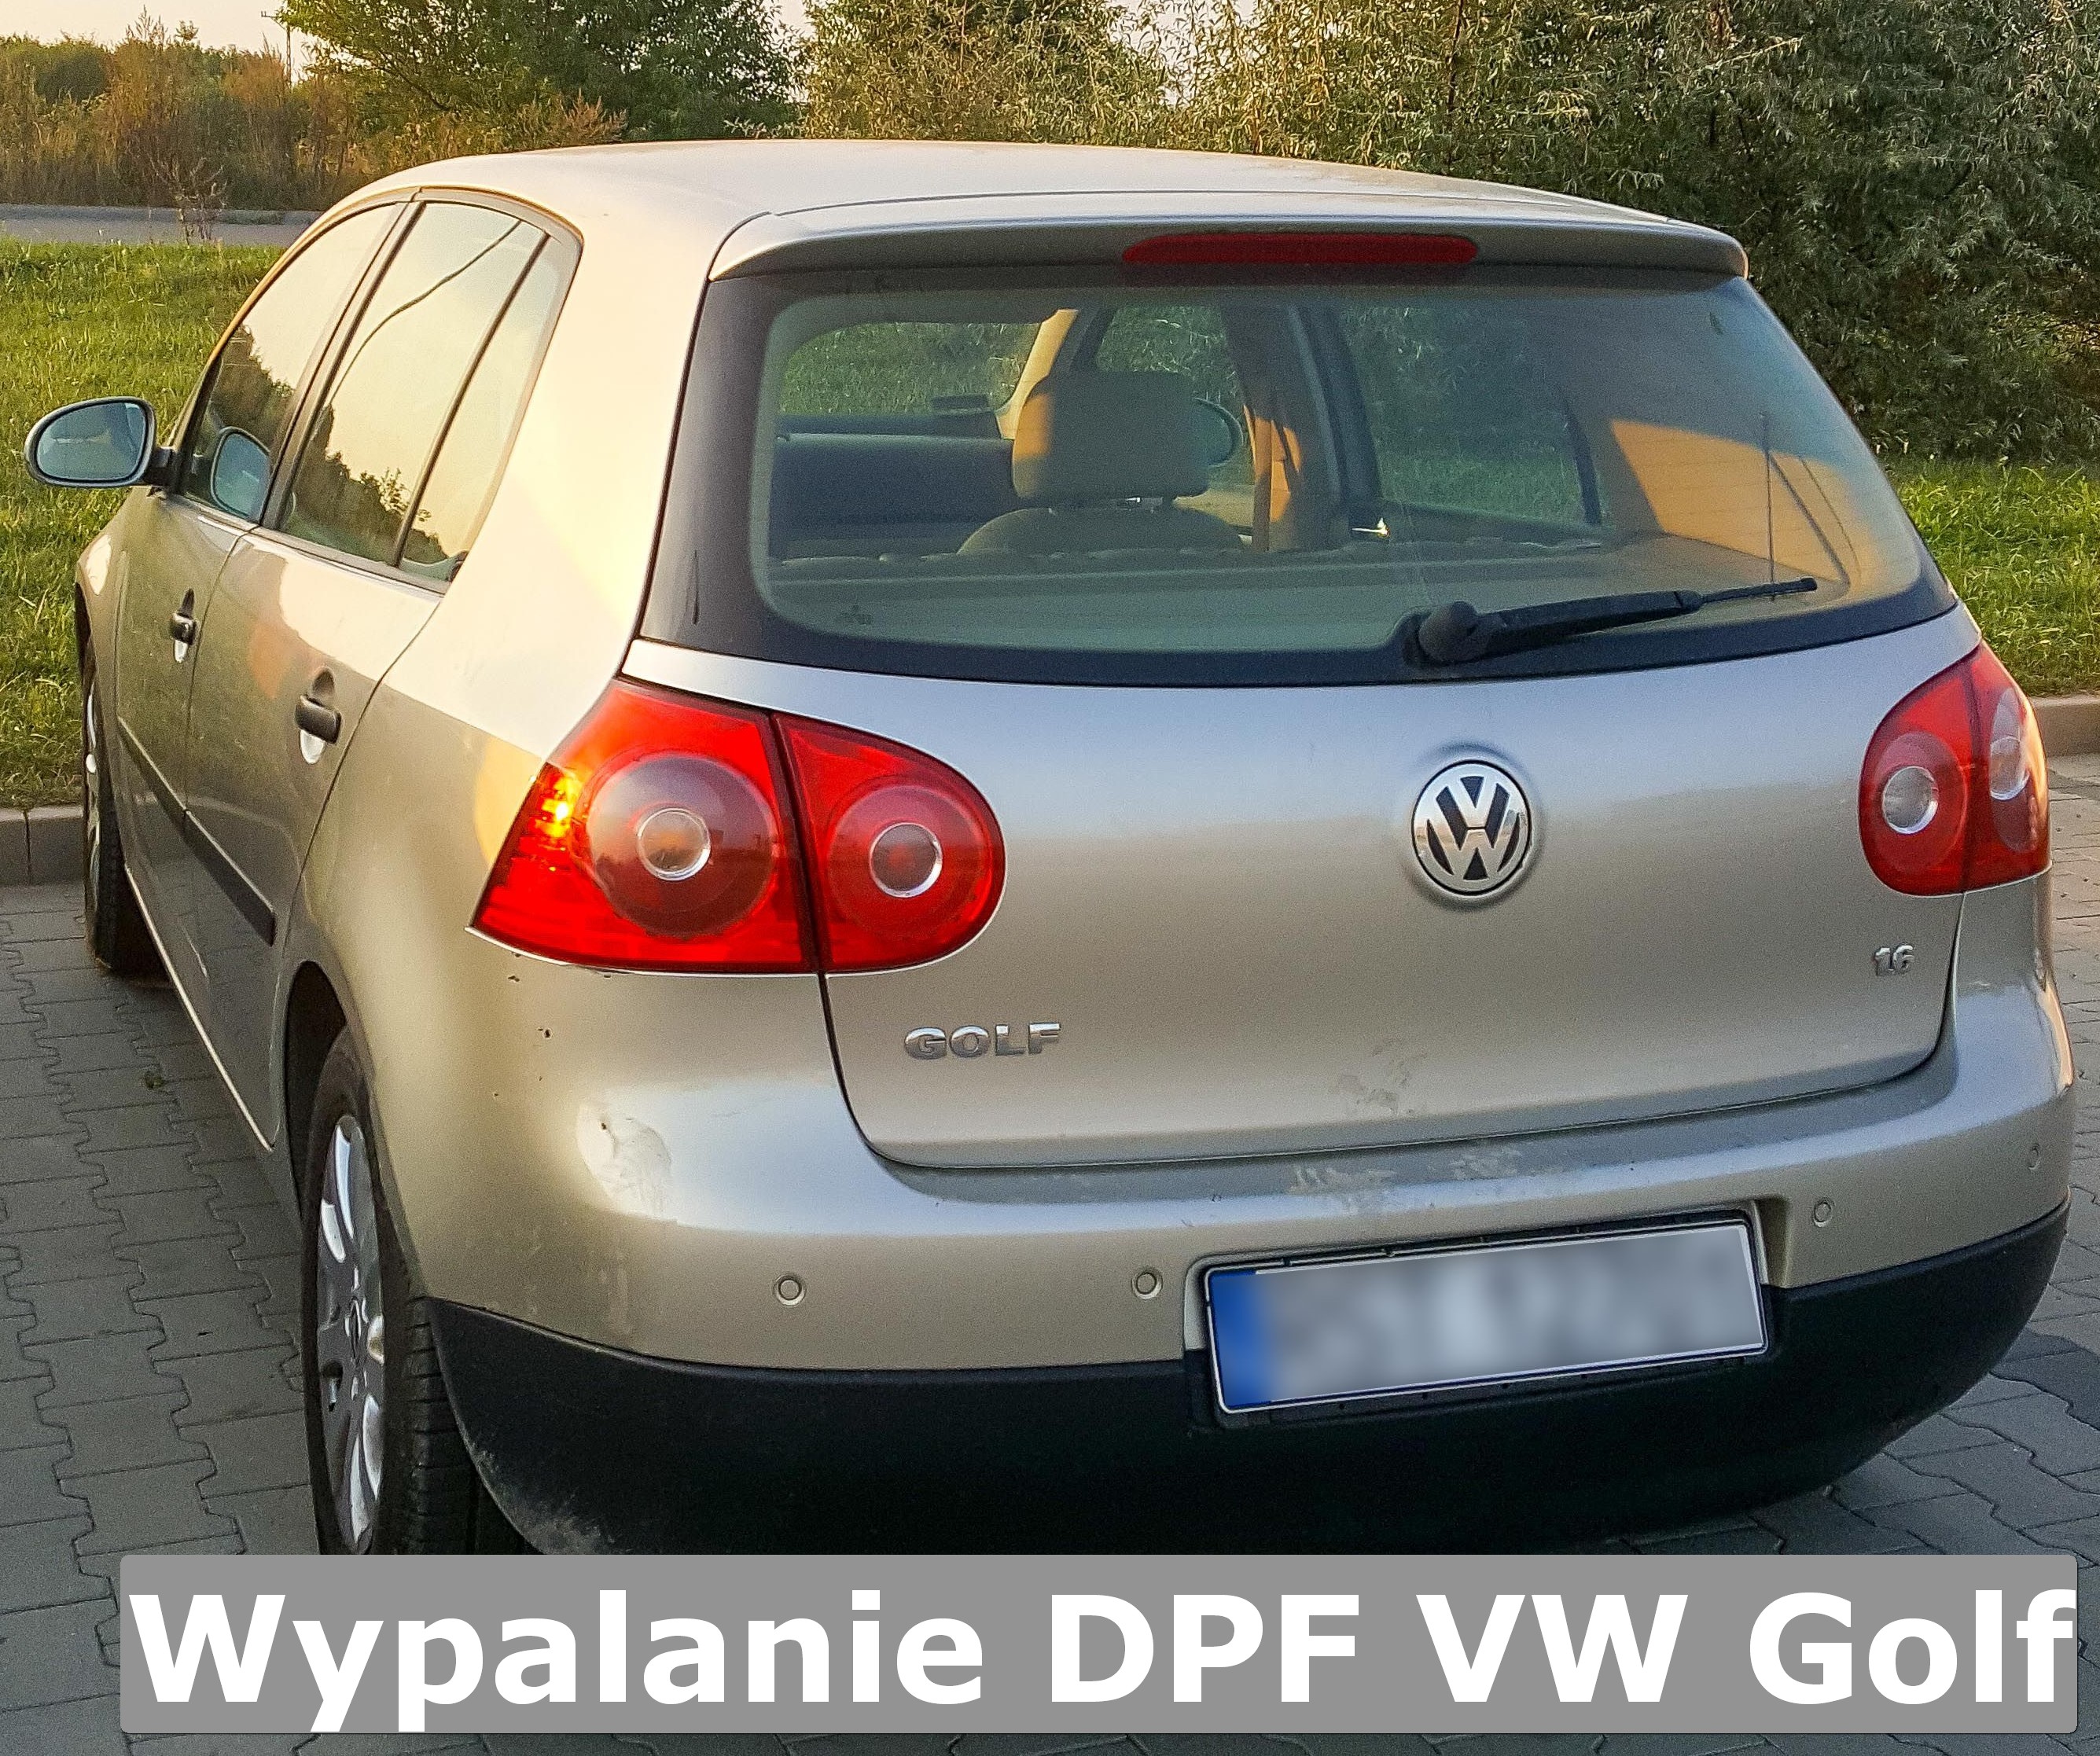 Wypalanie DPF (VW) Volkswagen część 20 filtrydpffap.pl